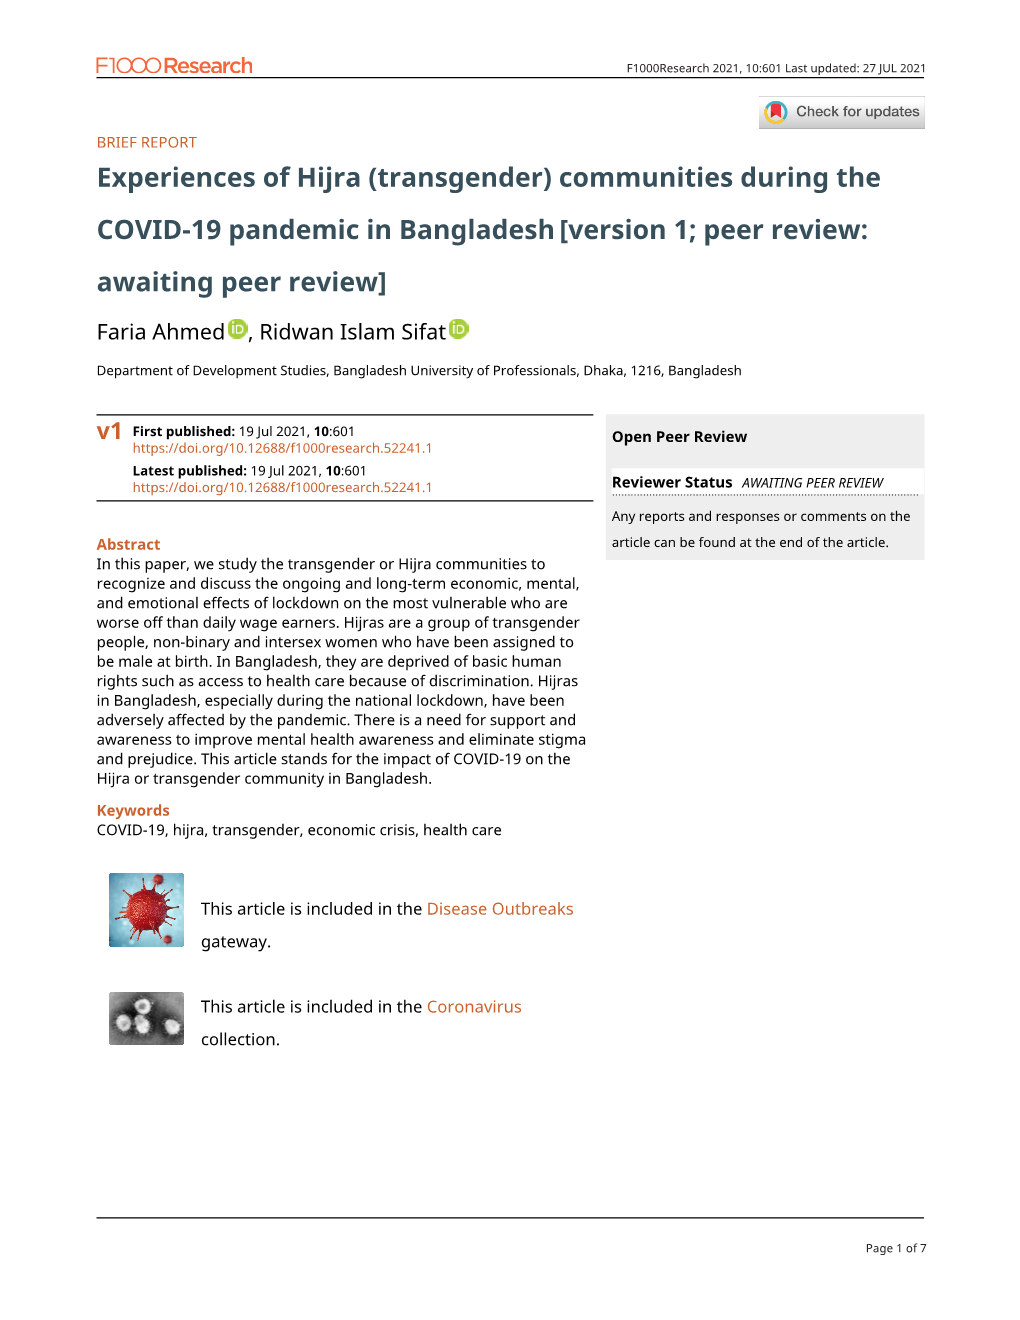 Experiences of Hijra (Transgender) Communities During the COVID-19 Pandemic in Bangladesh[Version 1; Peer Review: Awaiting Peer